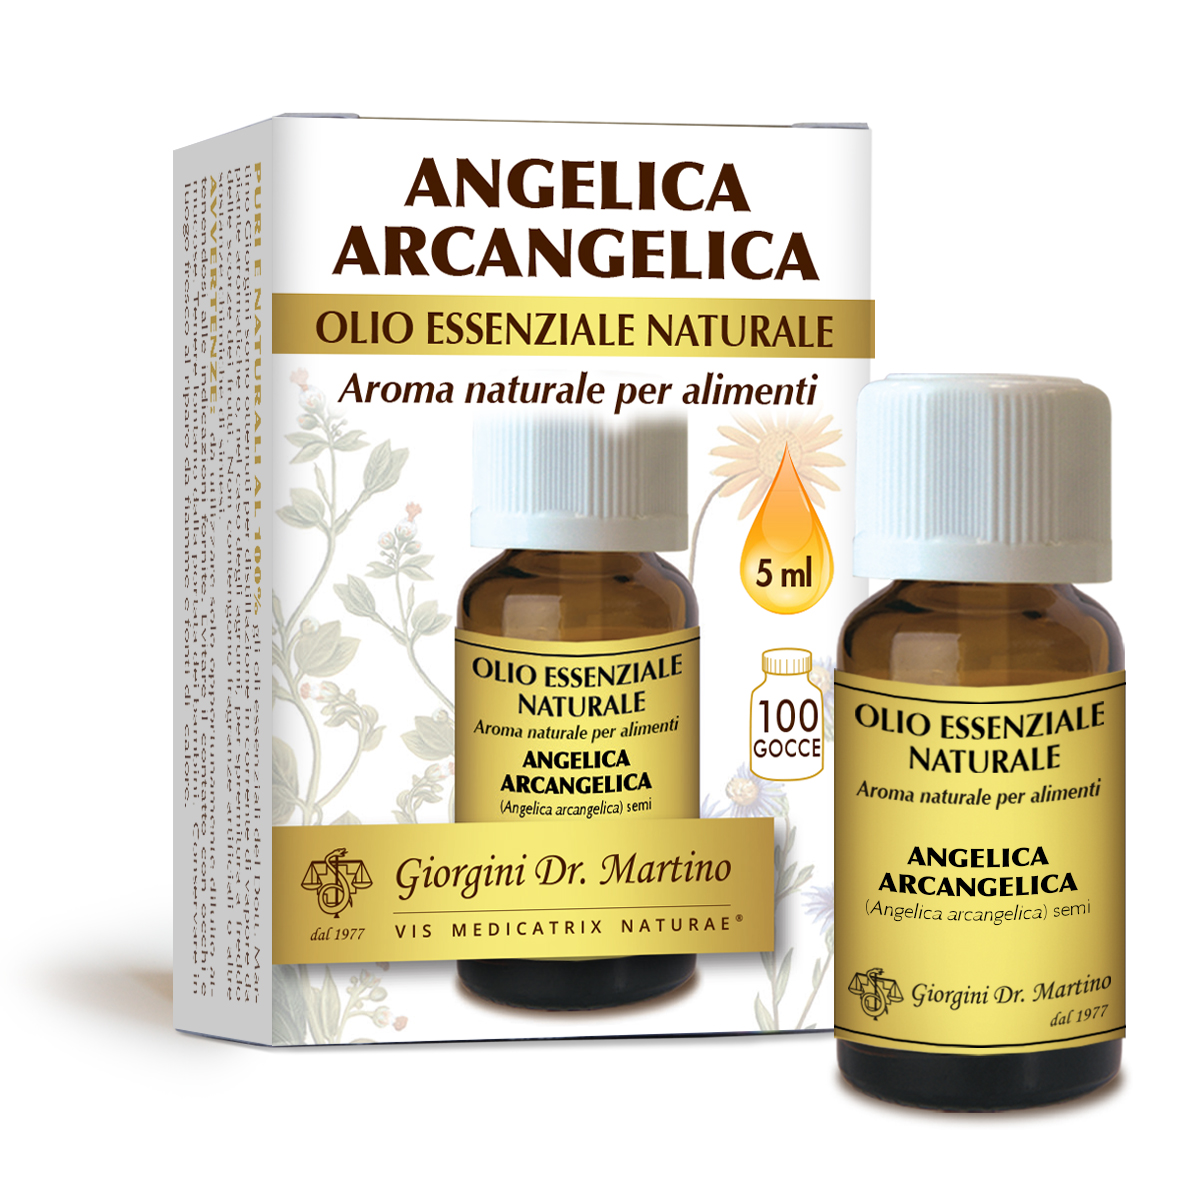 ANGELICA ARCANGELICA olio essenziale naturale 5 ml